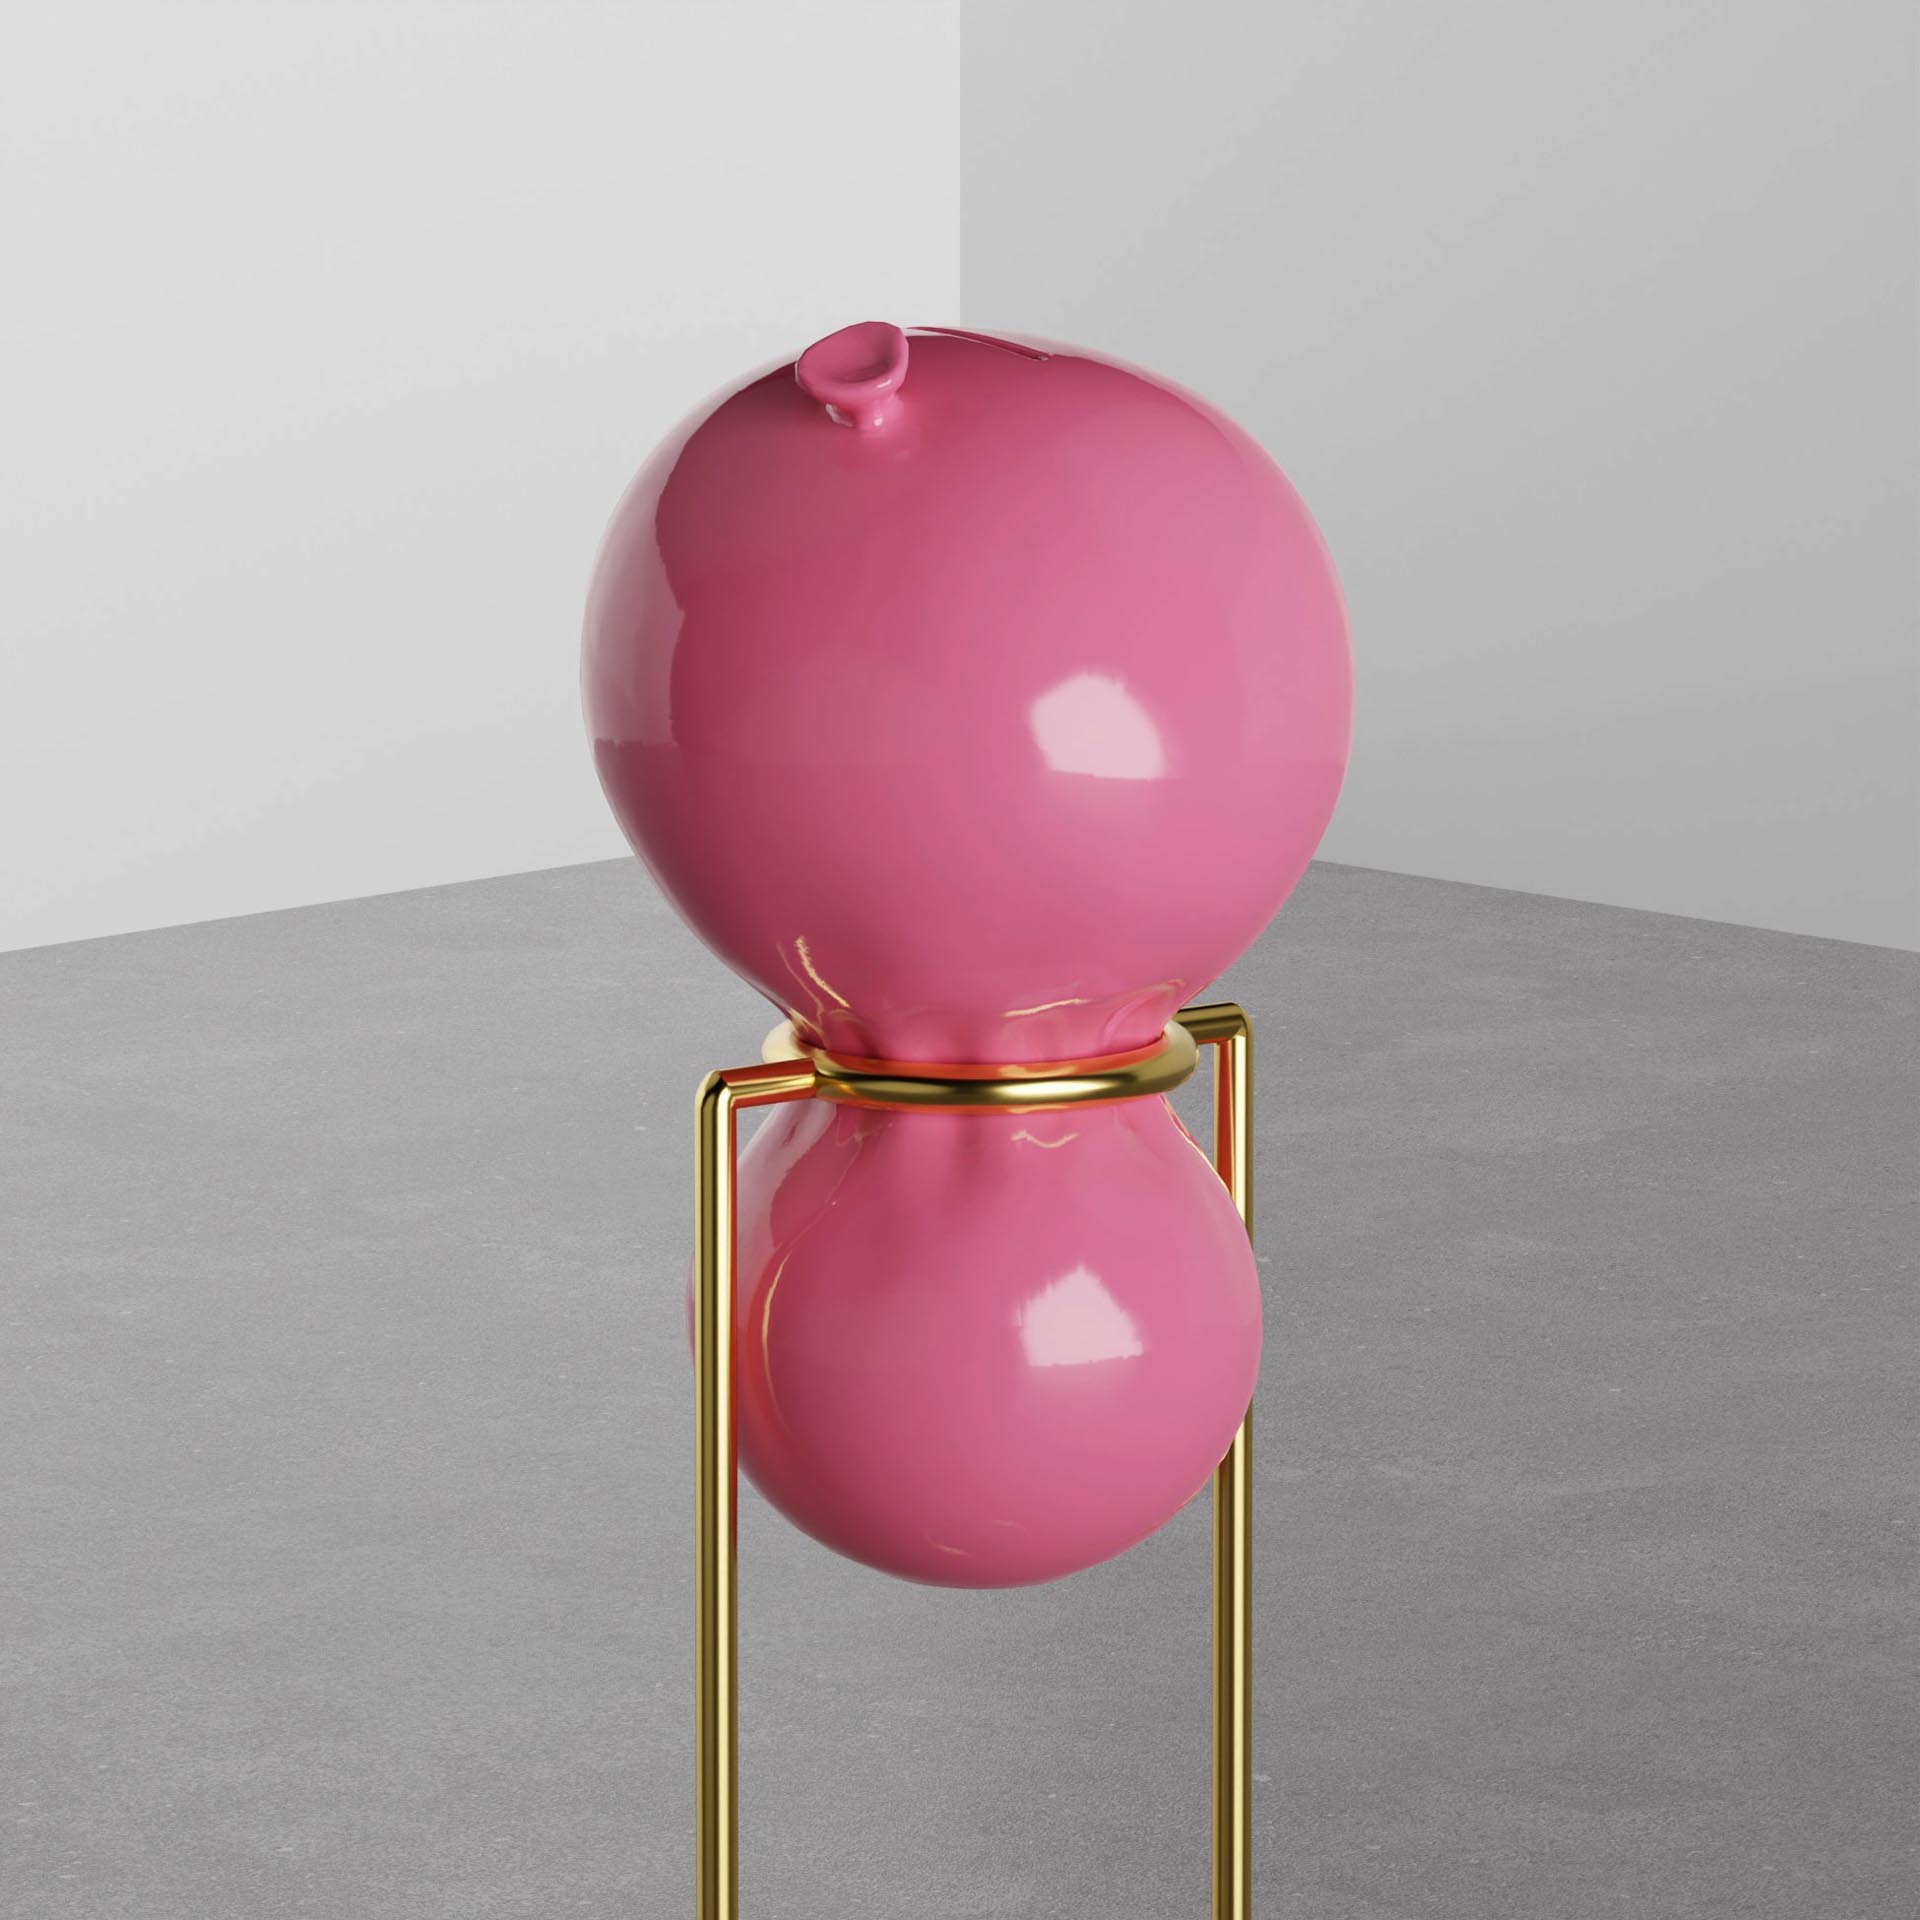 Balloon Piggy Bank by Ahmad Jarrar